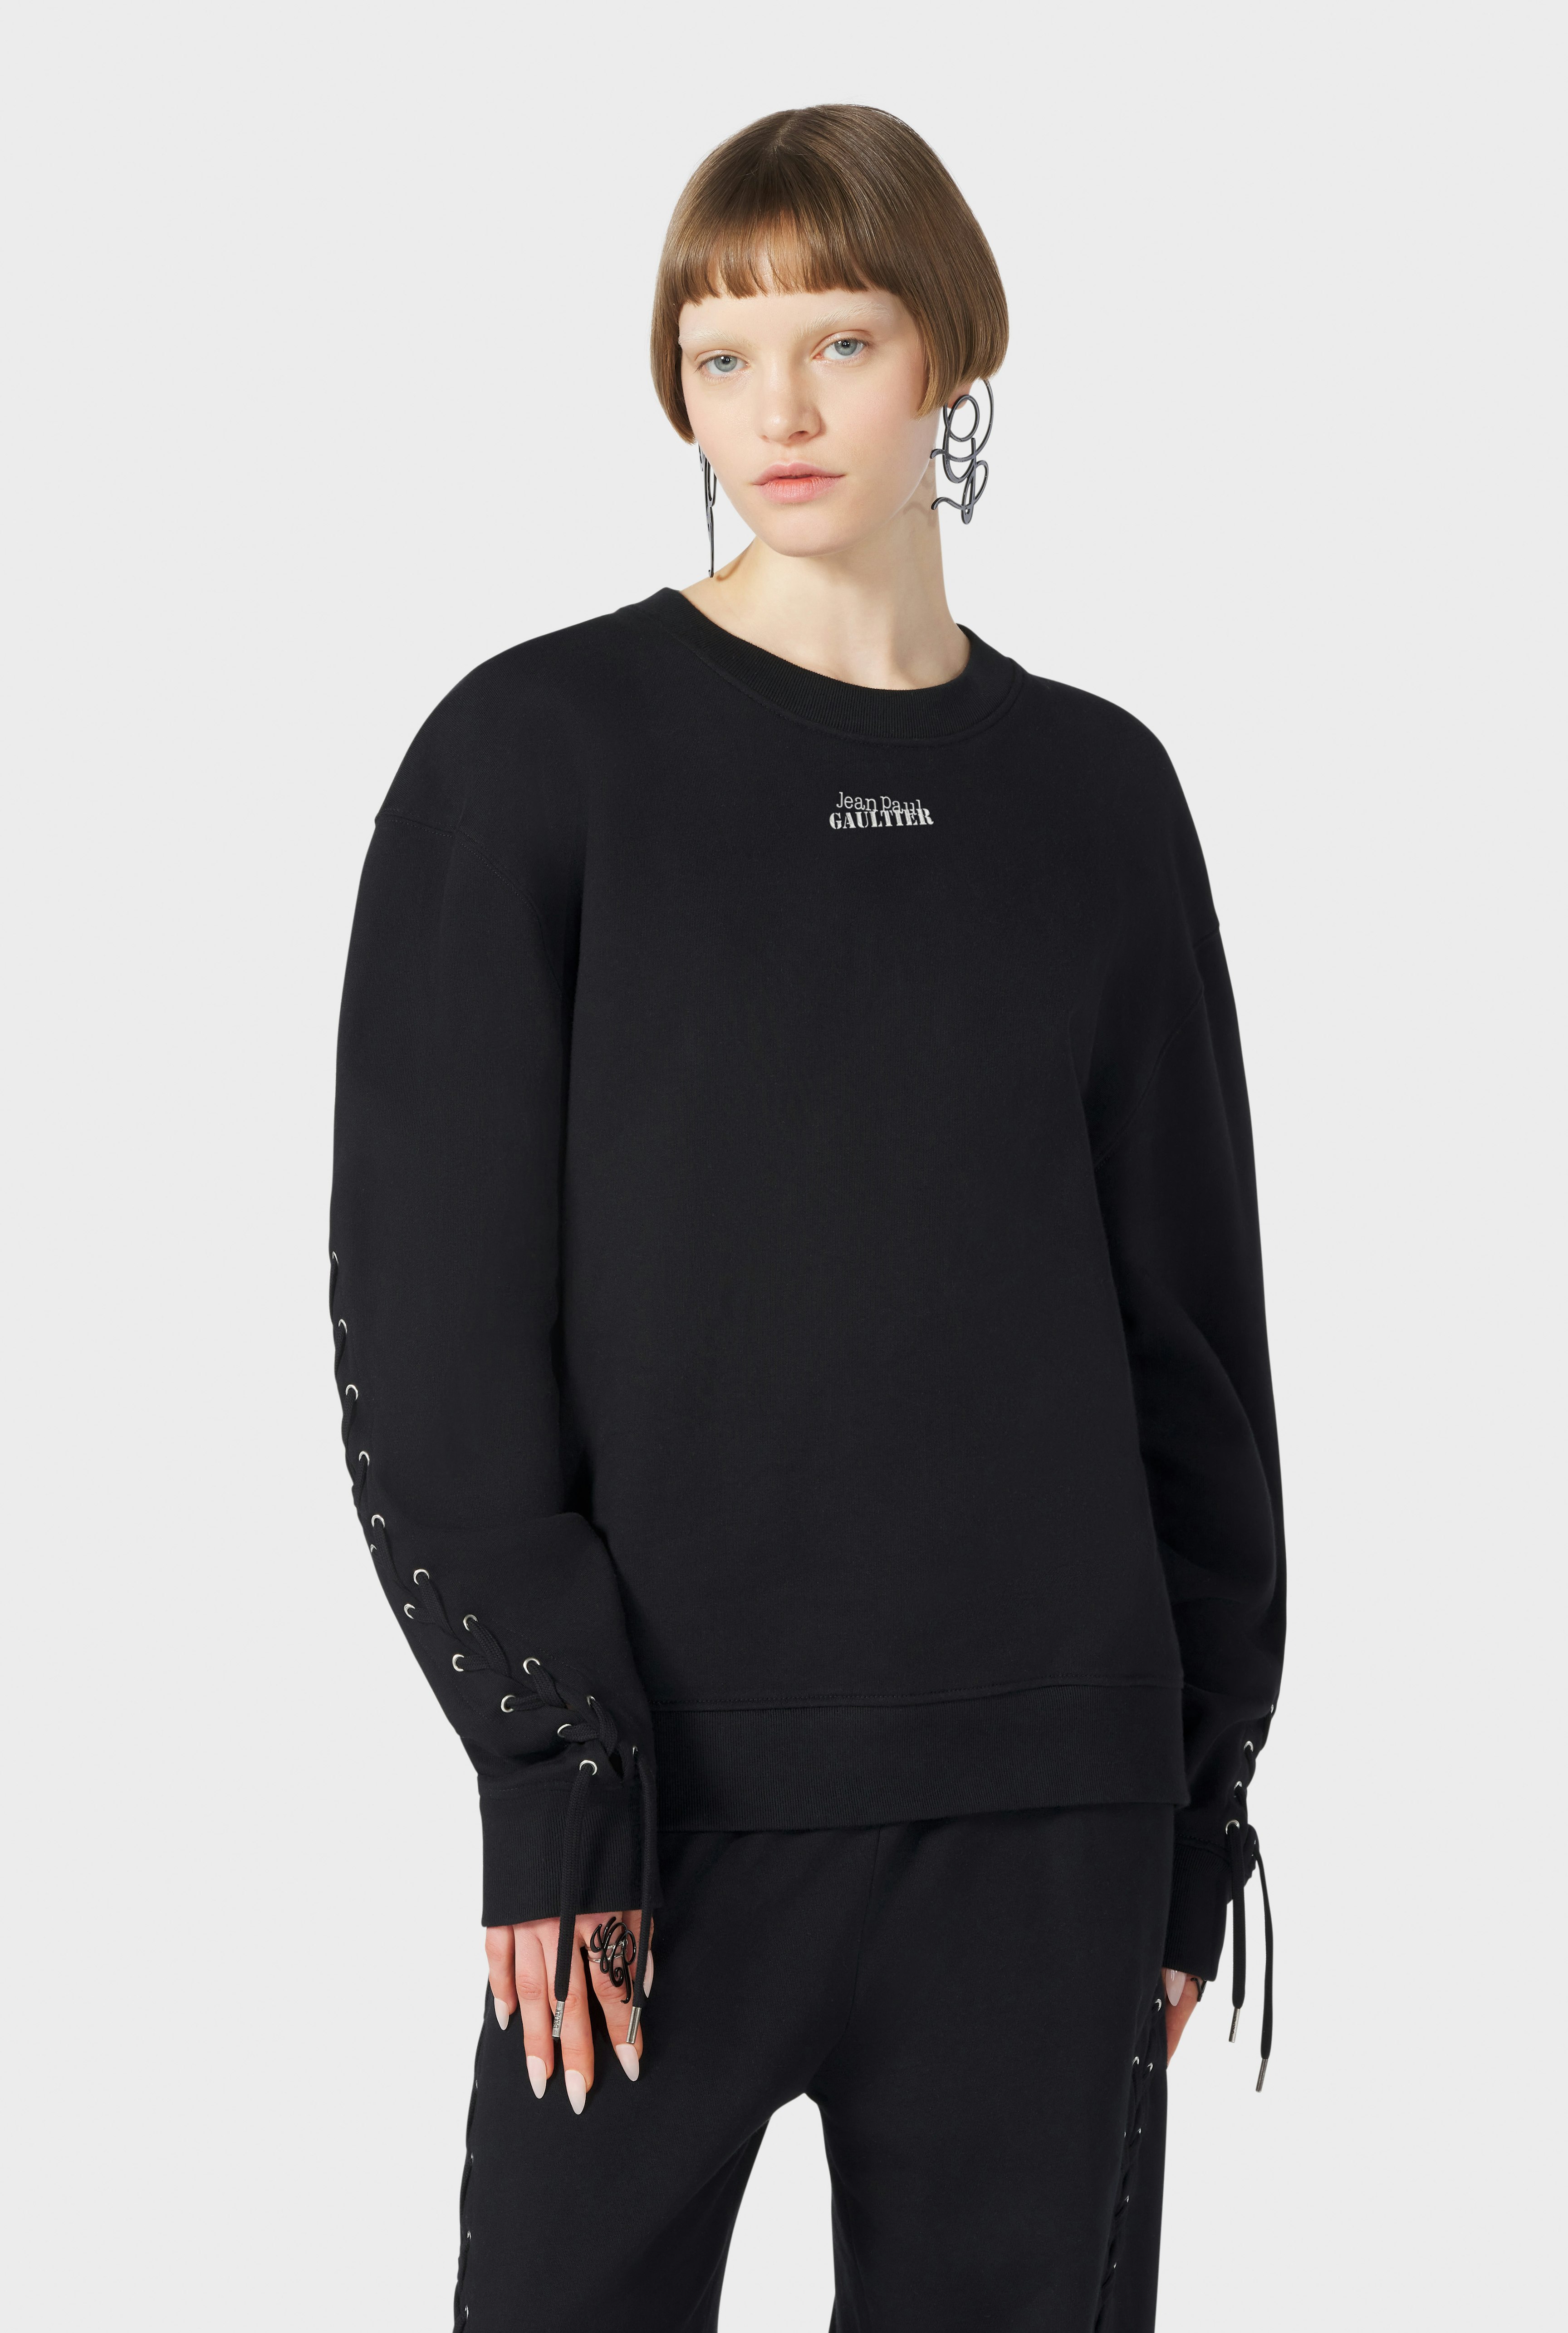 The Black Lace-Up JPG Sweatshirt